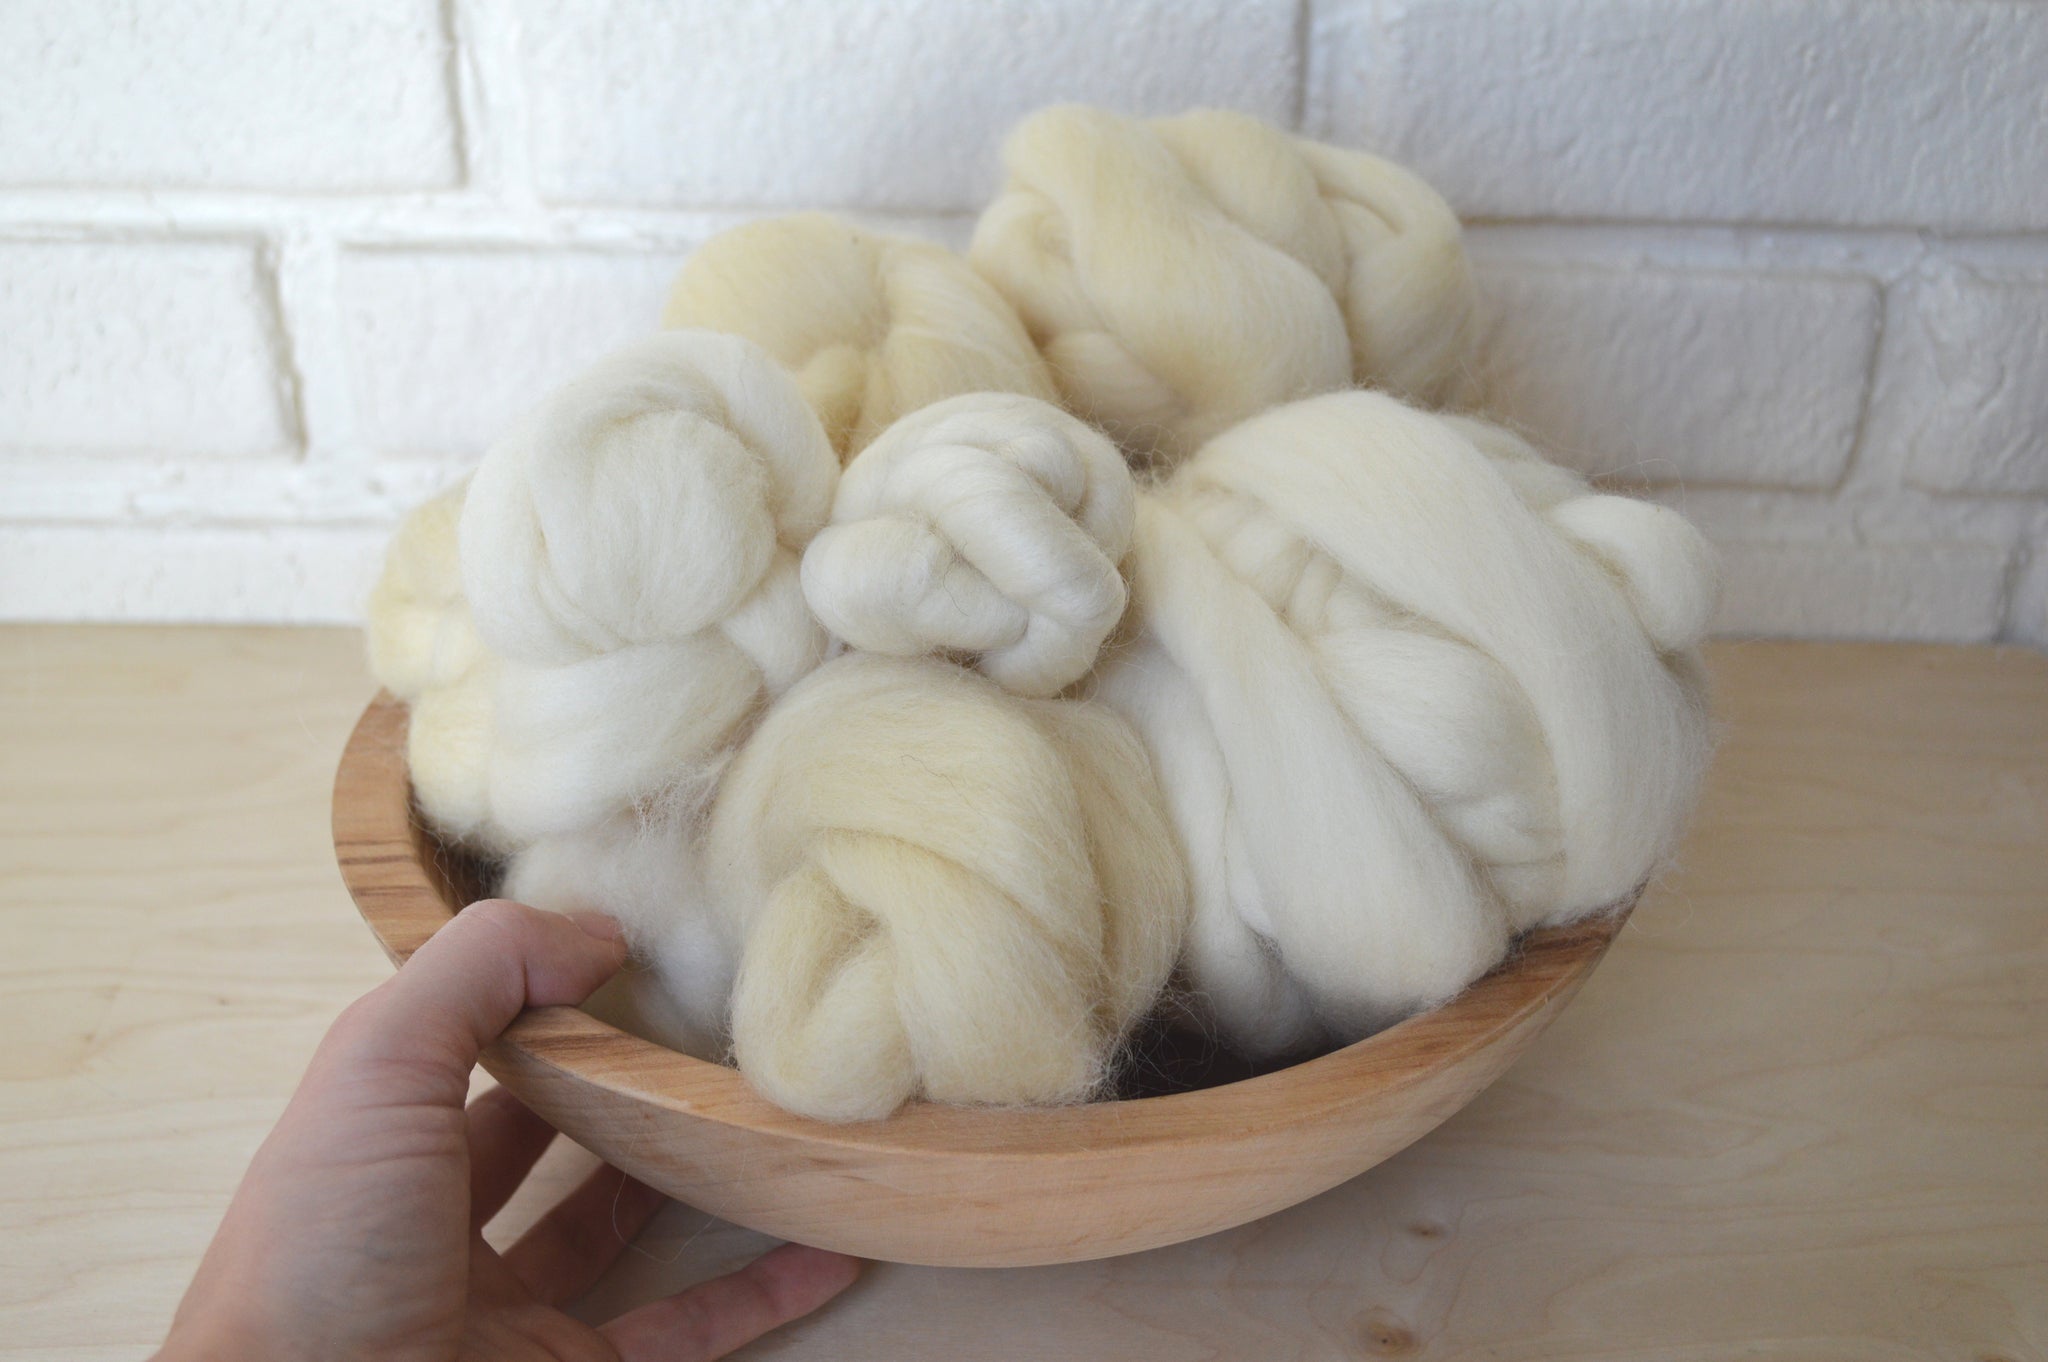  Natural Wool Roving - 8.8 oz Fibre Wool Yarn Roving Needle  Felting Wool Hand Spinning for Beginners Adult Wool Felting Yarn Supplies  DIY Craft Materials - Mocha Brown : Arts, Crafts & Sewing